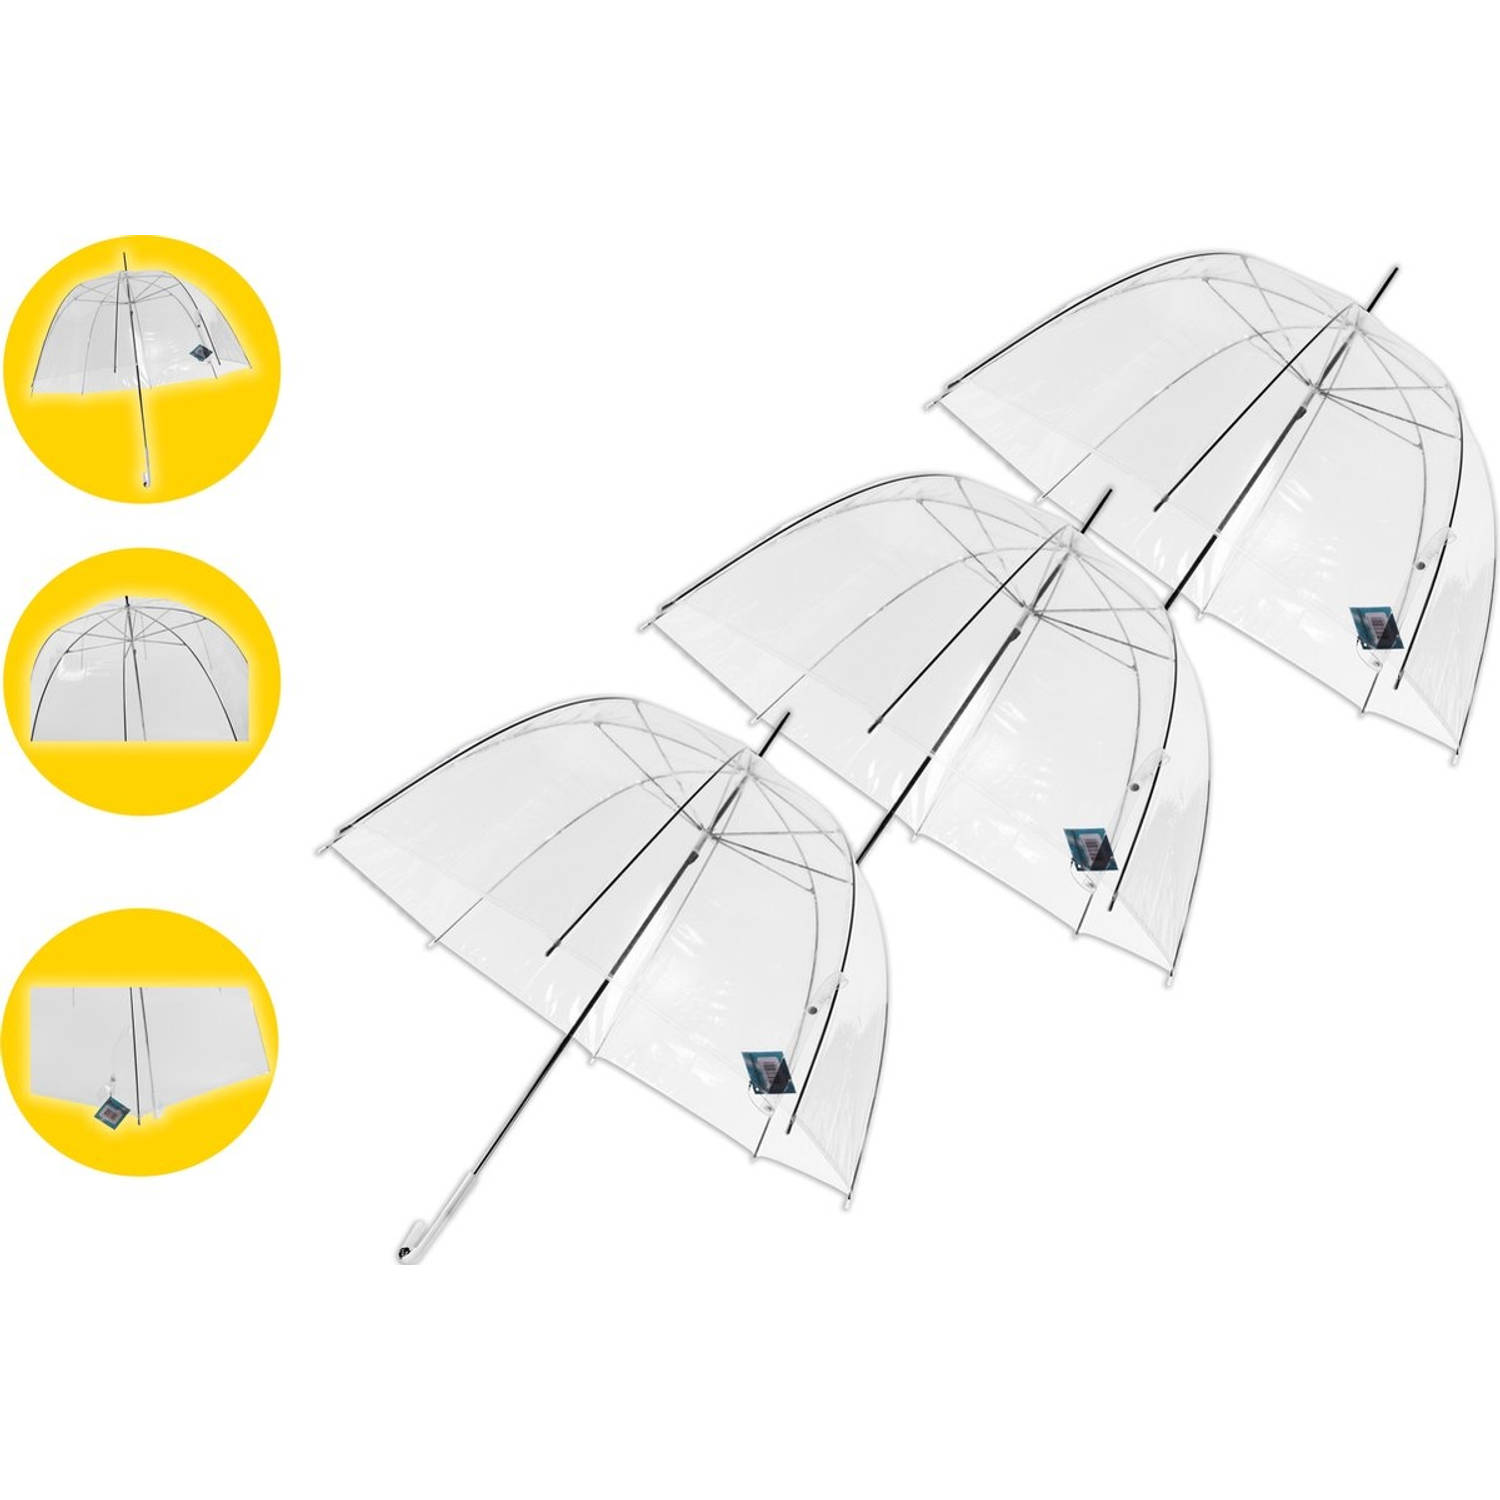 3 stuks Paraplu transparant plastic paraplu's 75 cm - doorzichtige paraplu - trouwparaplu - bruidsparaplu - stijlvol - bruiloft - trouwen - fashionable - trouwparaplu